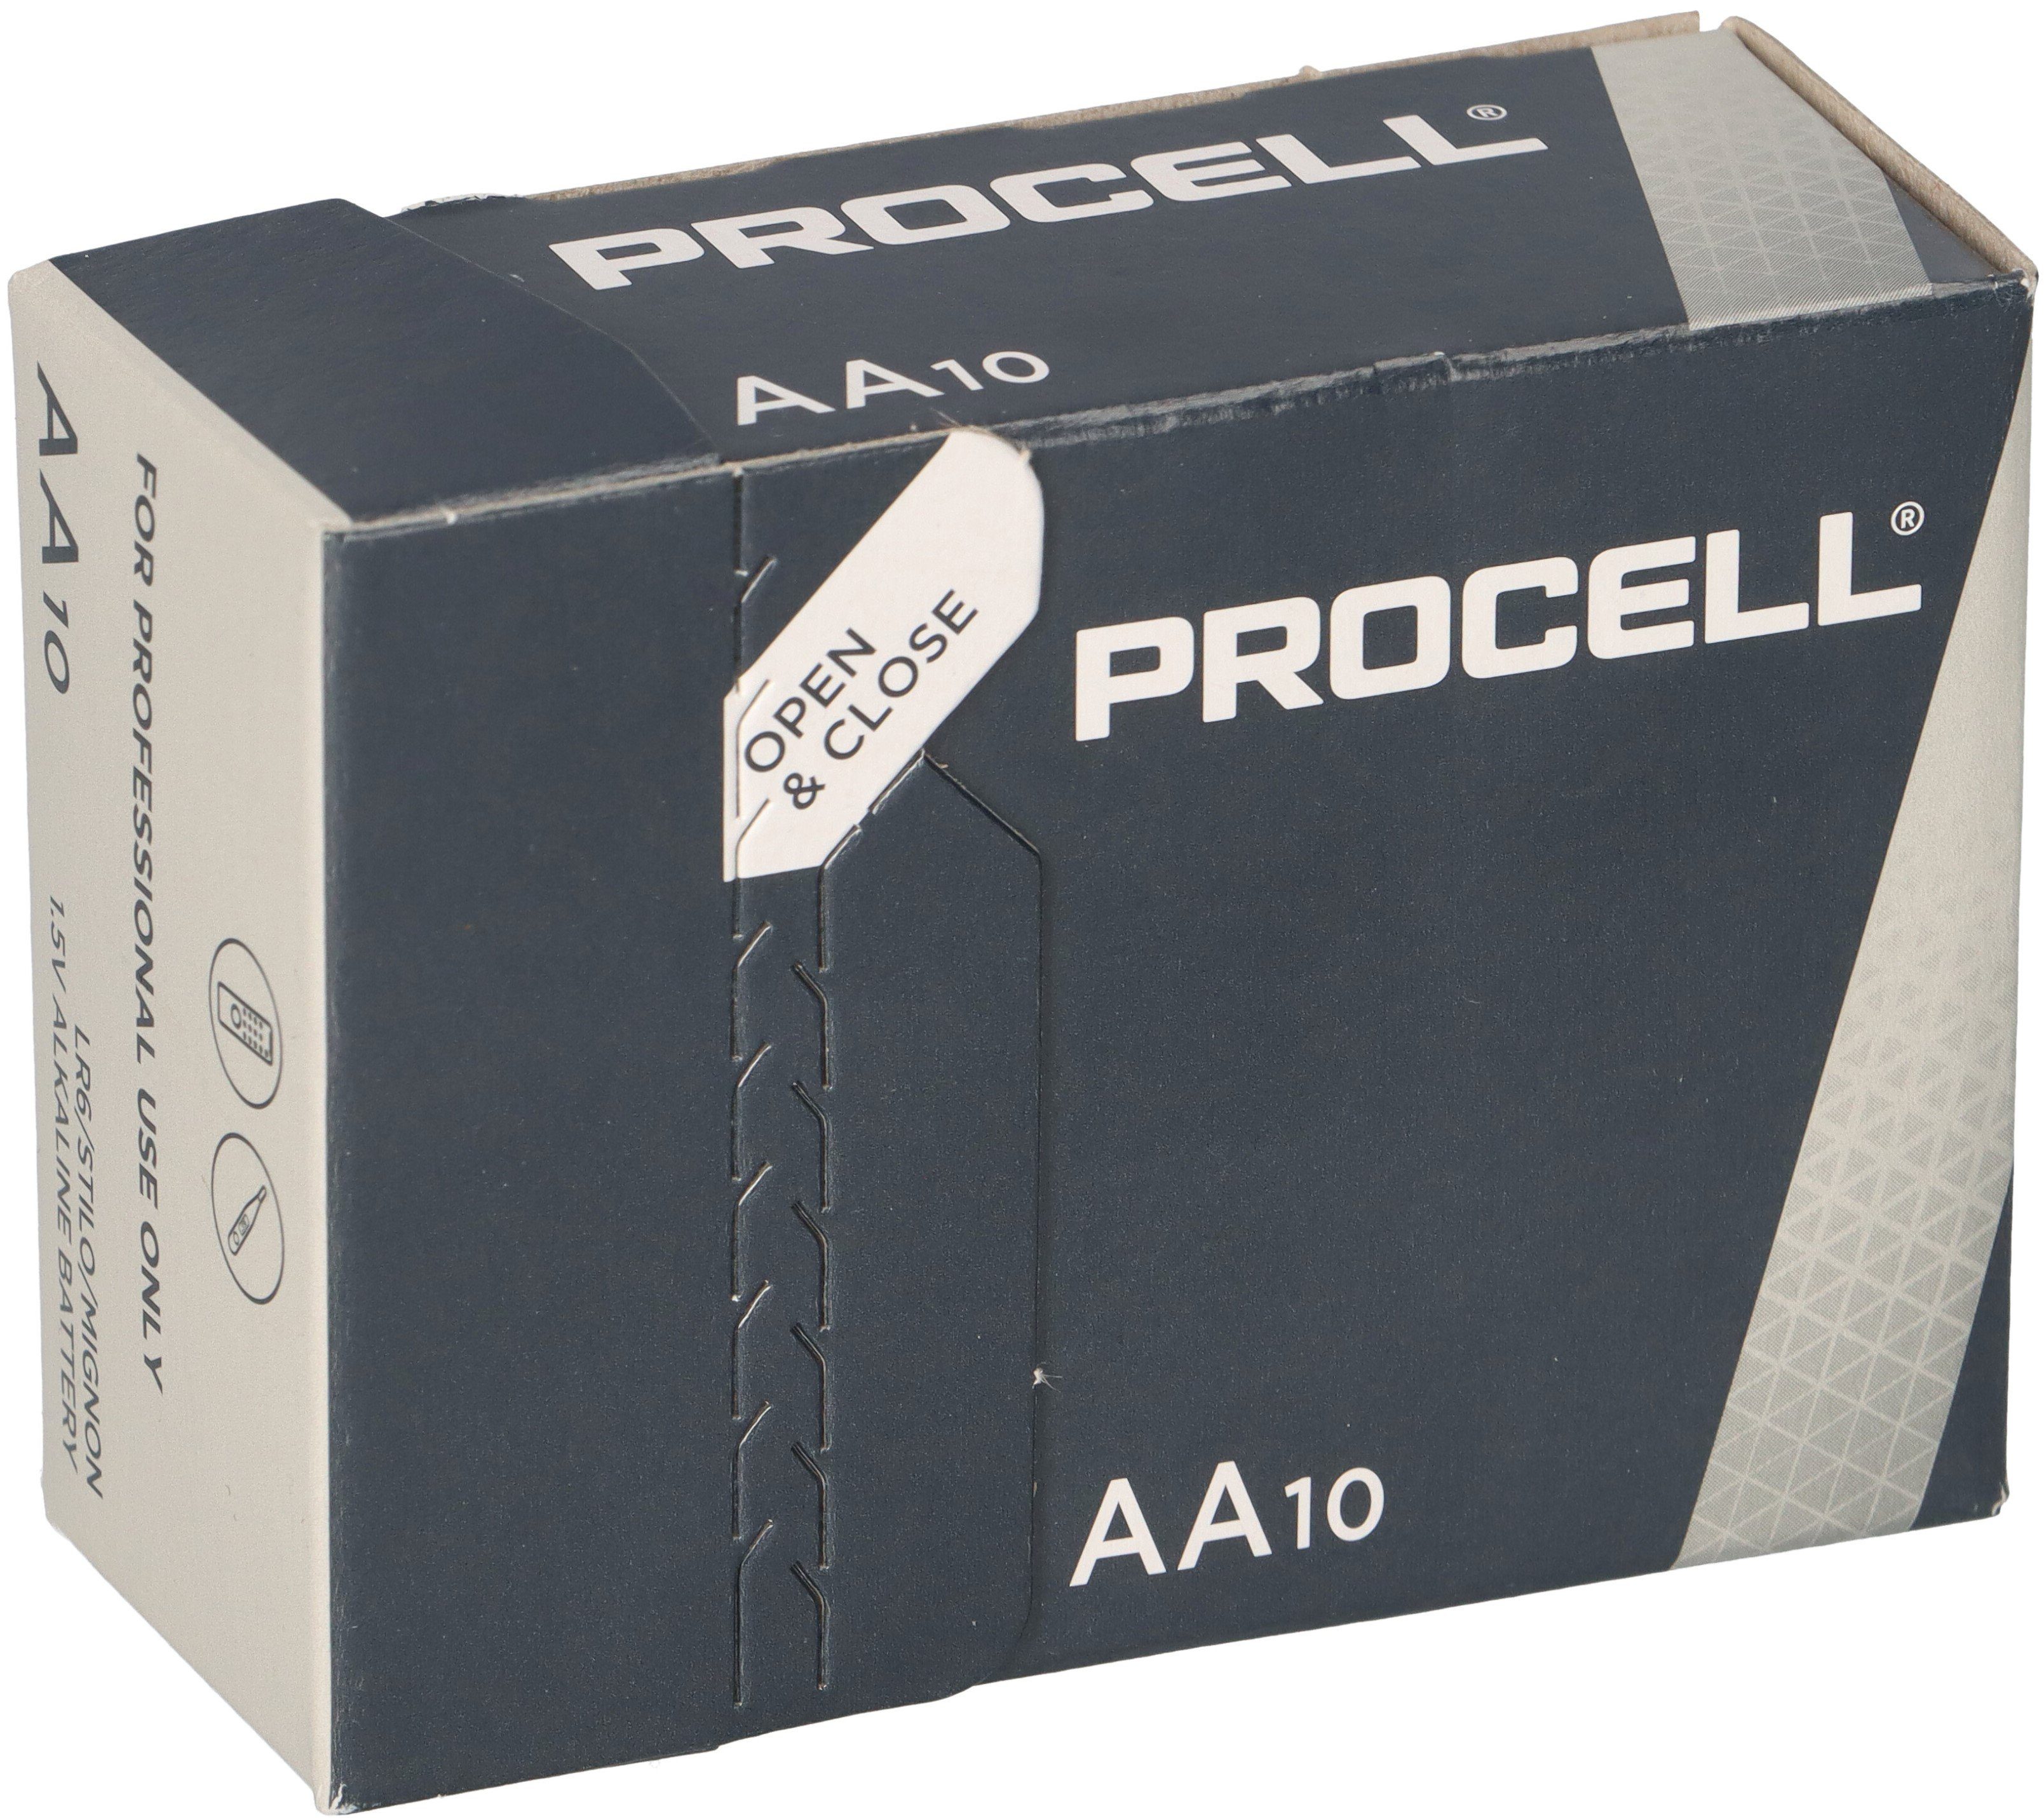 Duracell 10x Duracell Procell MN1500 Mignon AA LR6 Batterie Batterie